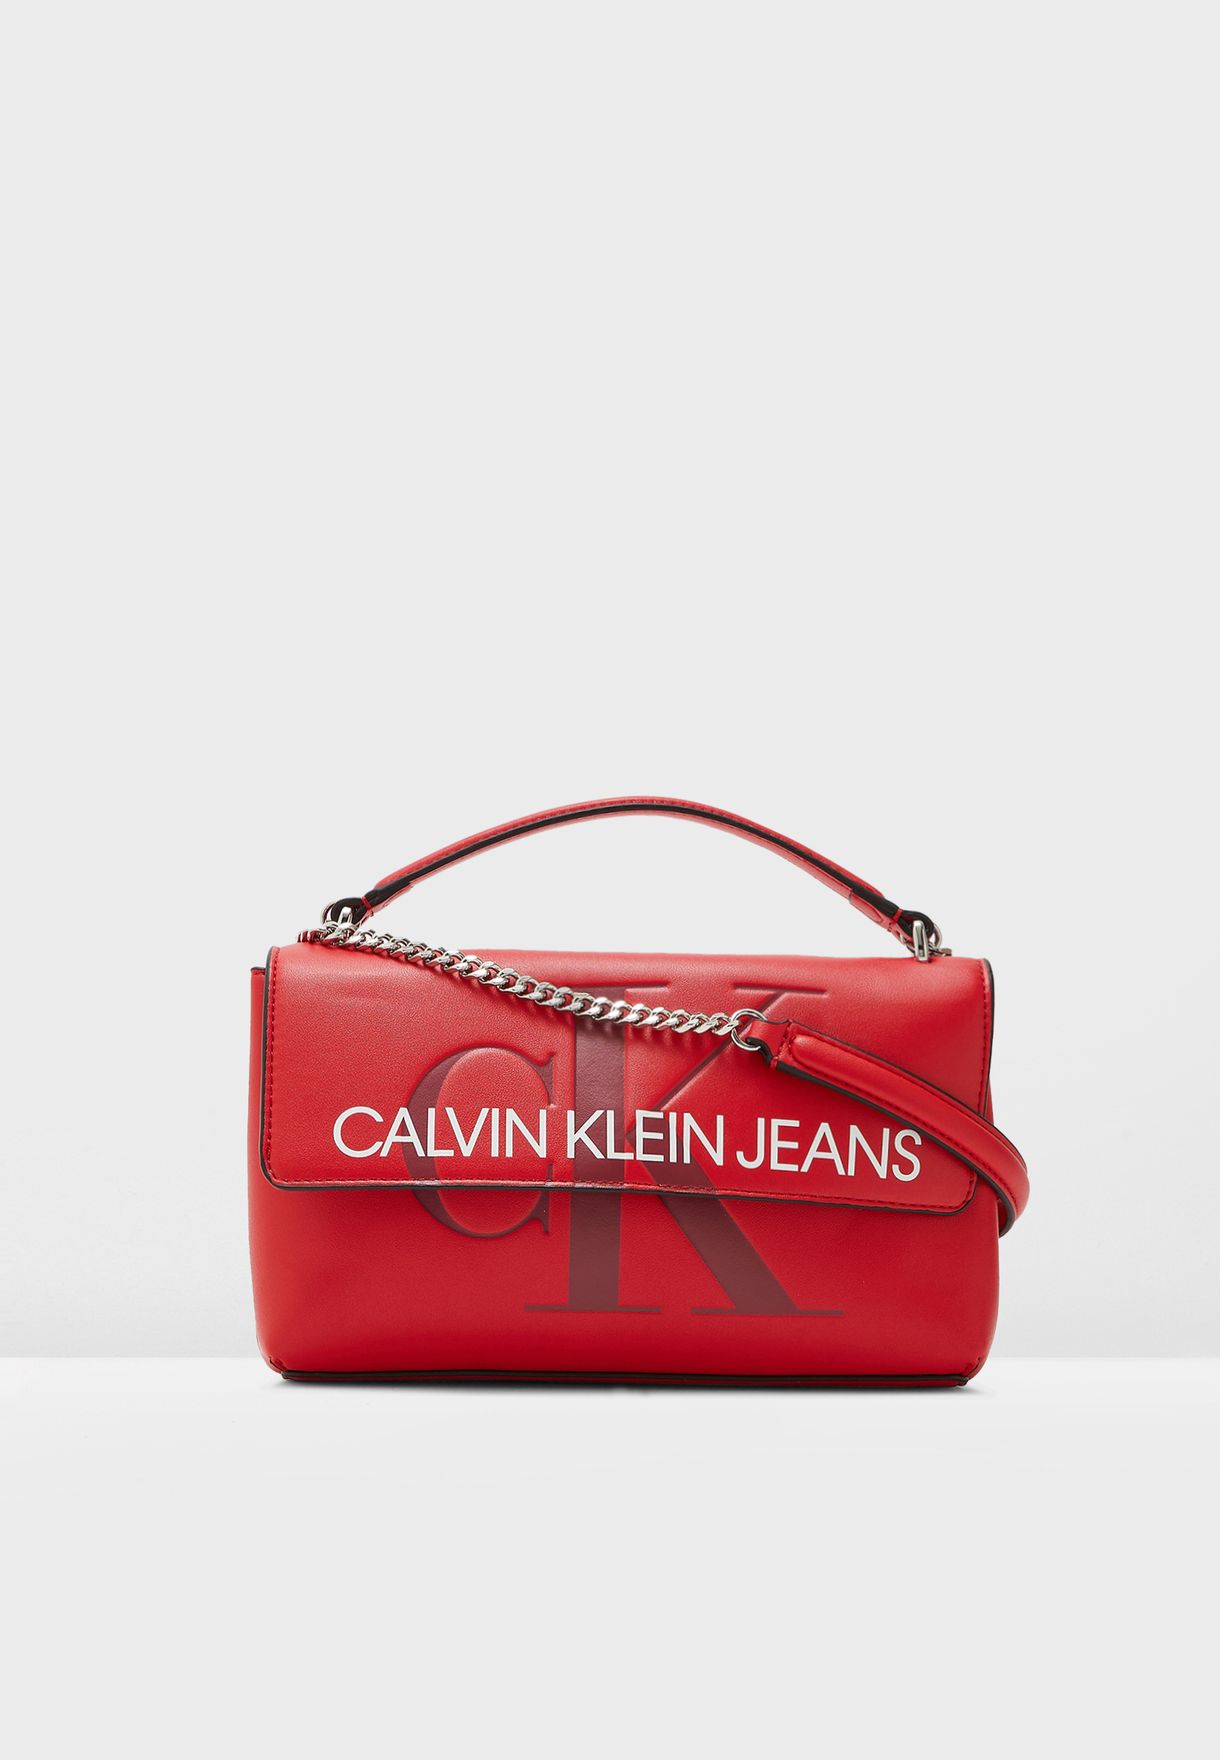 calvin klein jeans red bag